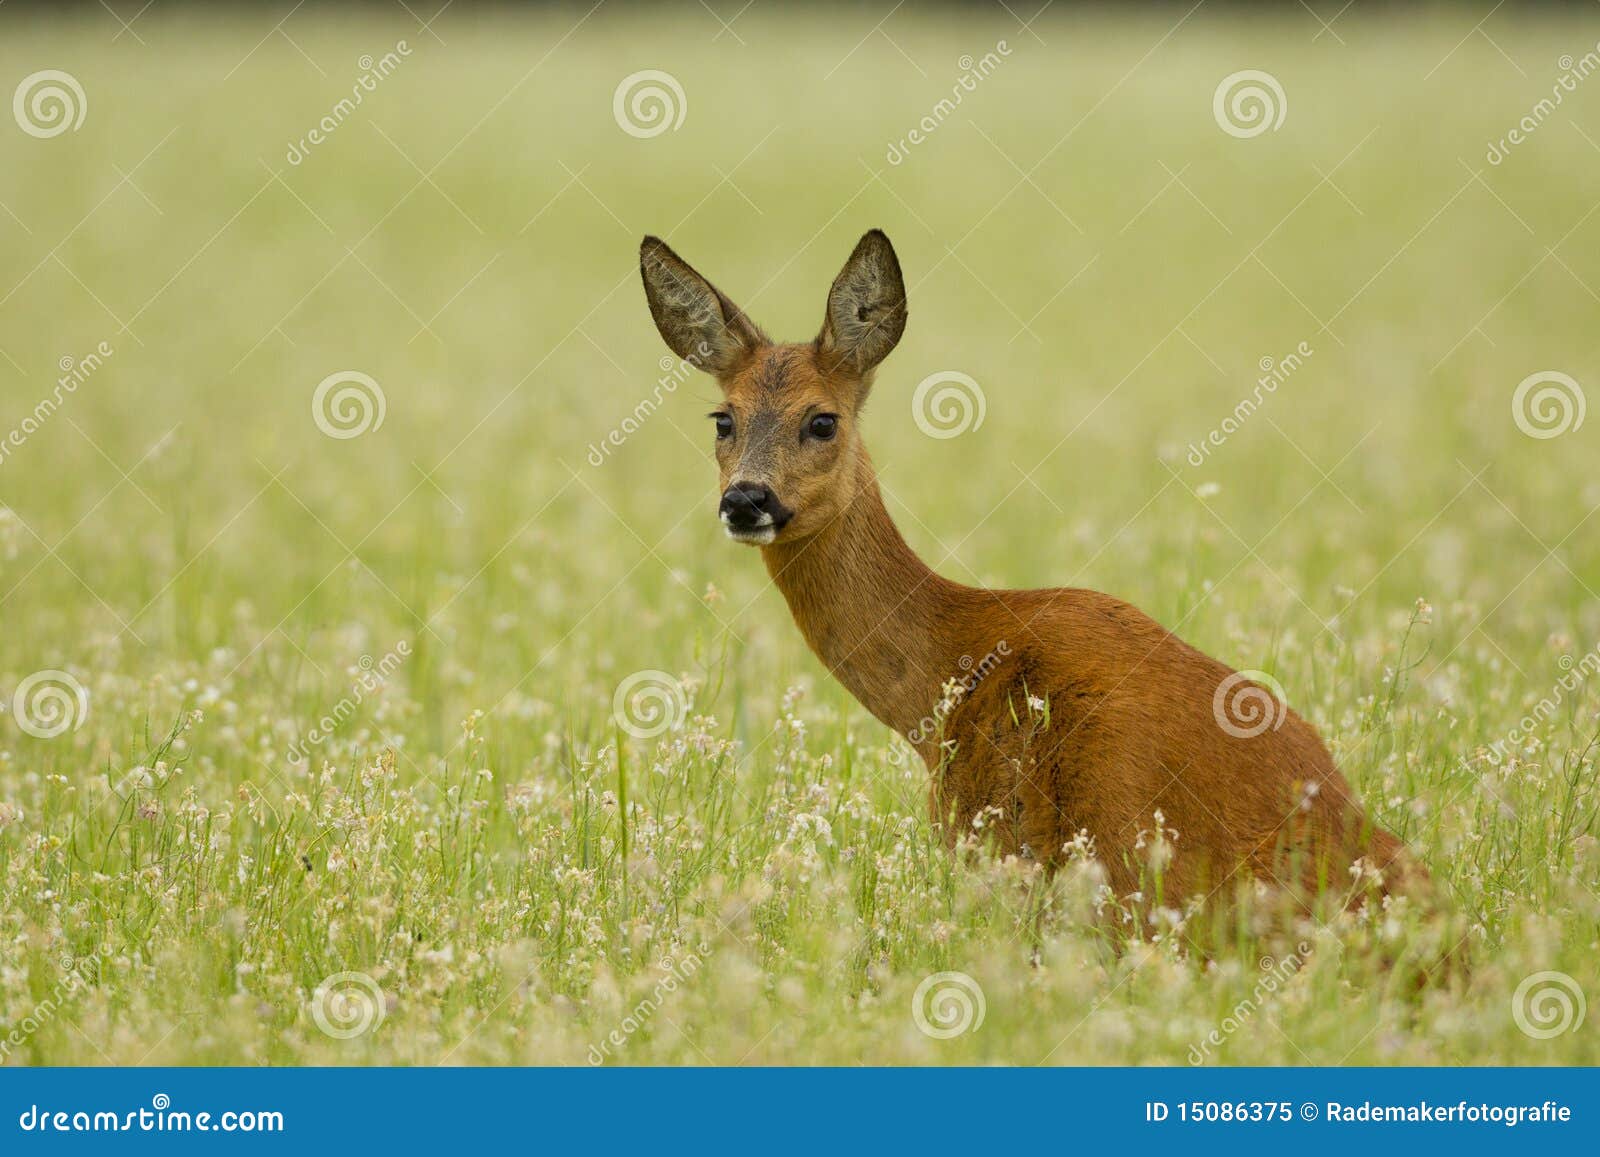 roe deer doe sitting in buckwheat